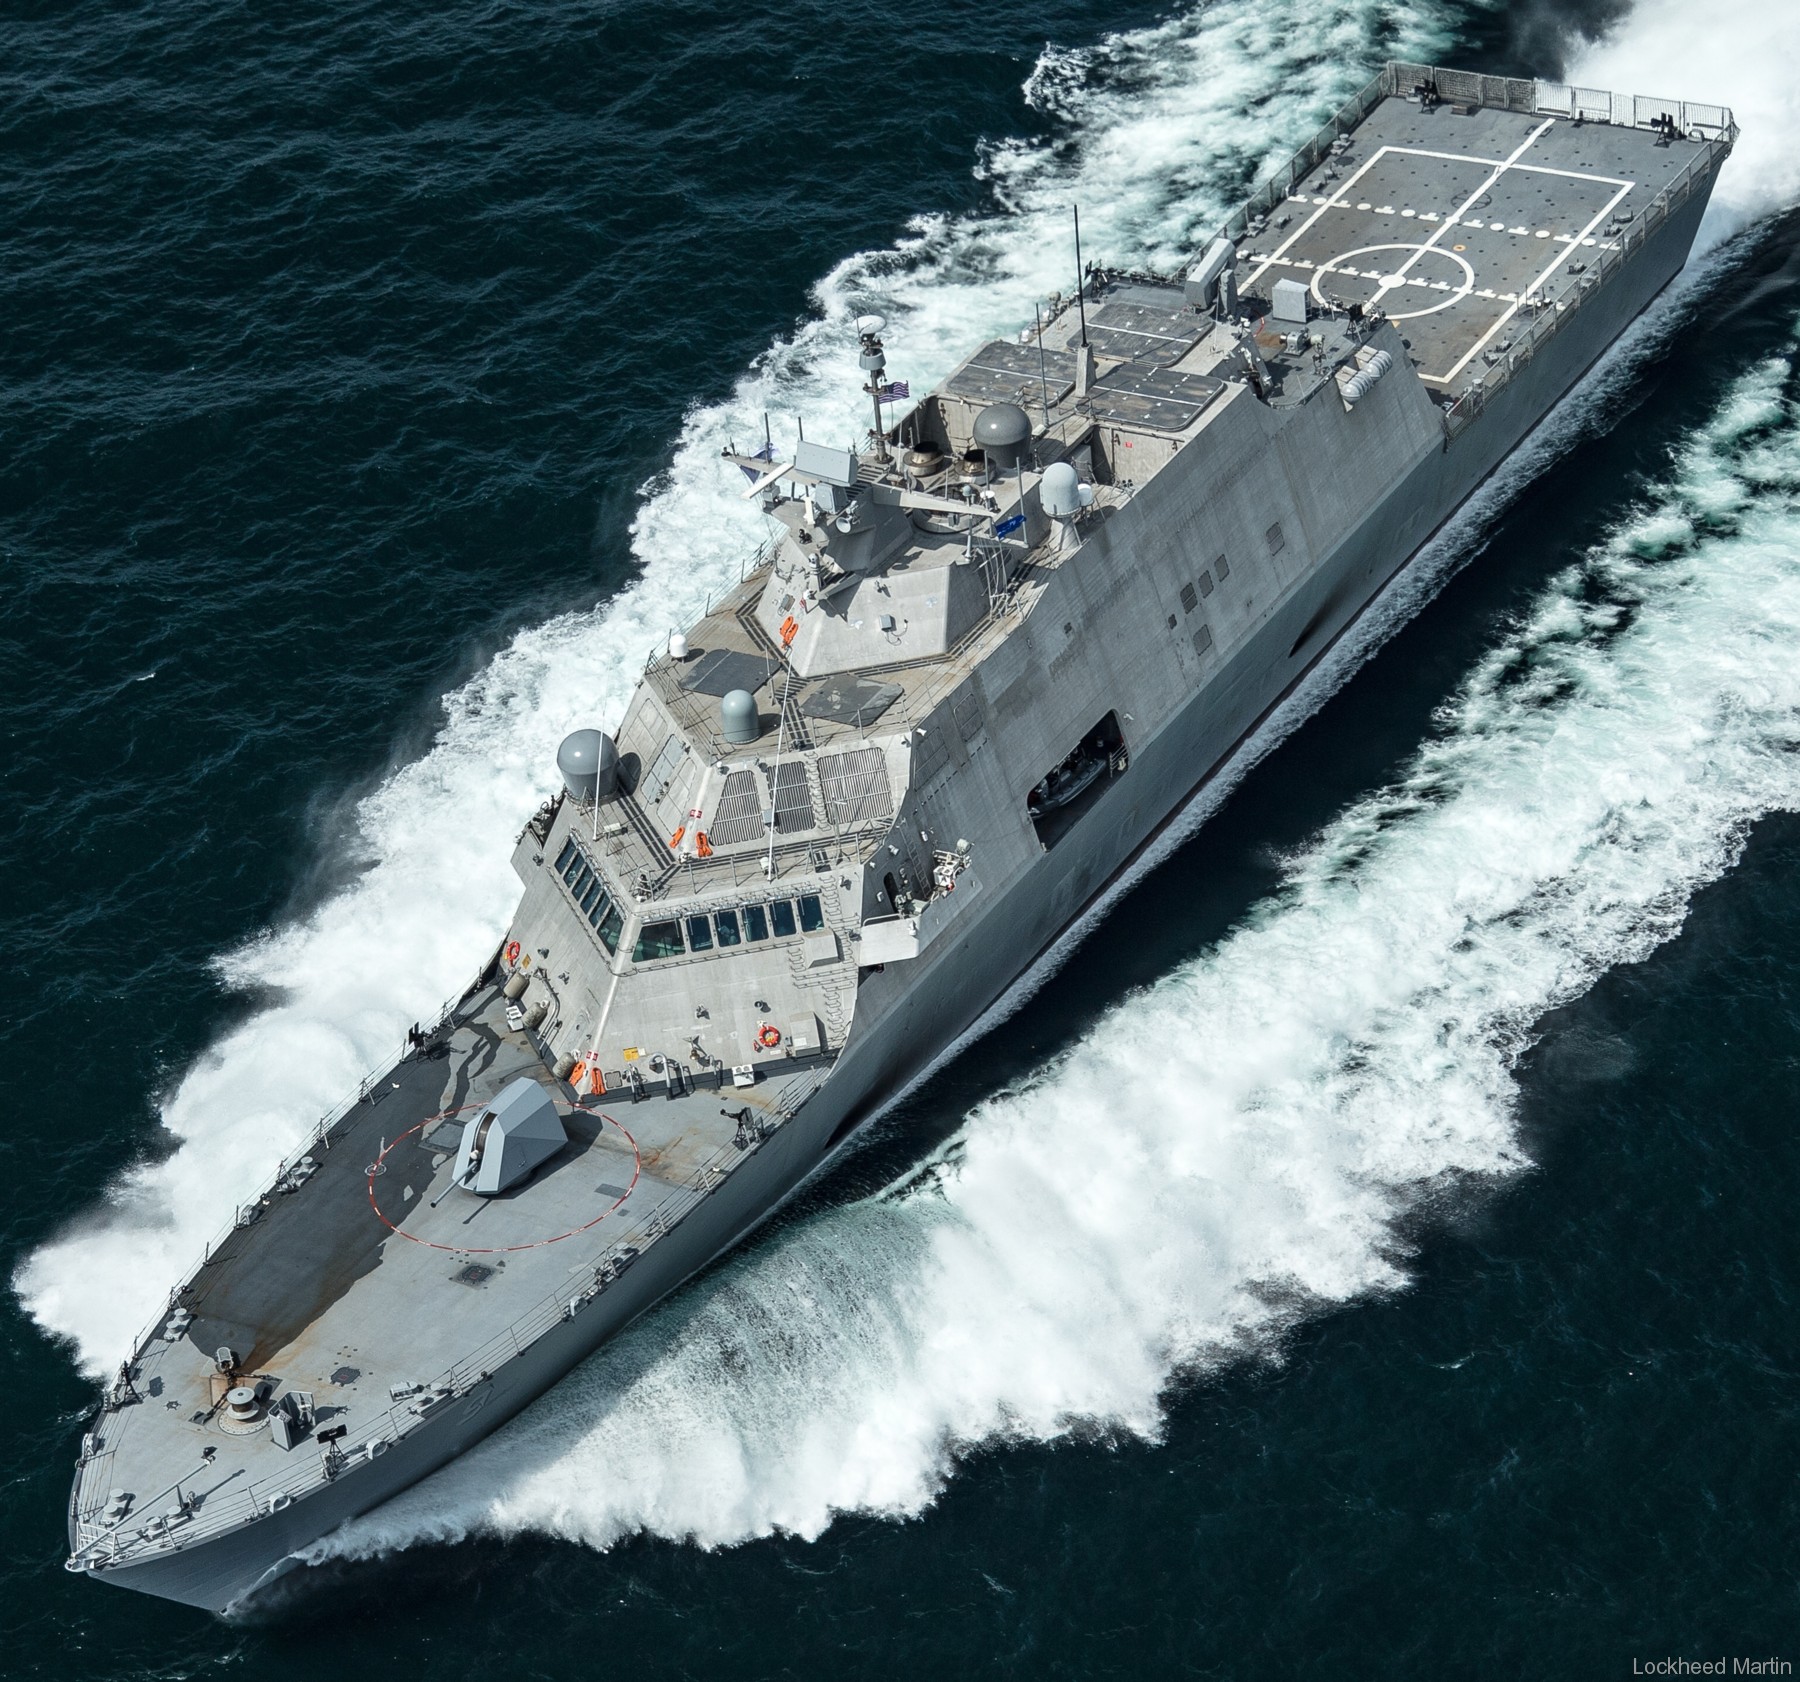 lcs-9 uss little rock freedom class littoral combat ship us navy 15